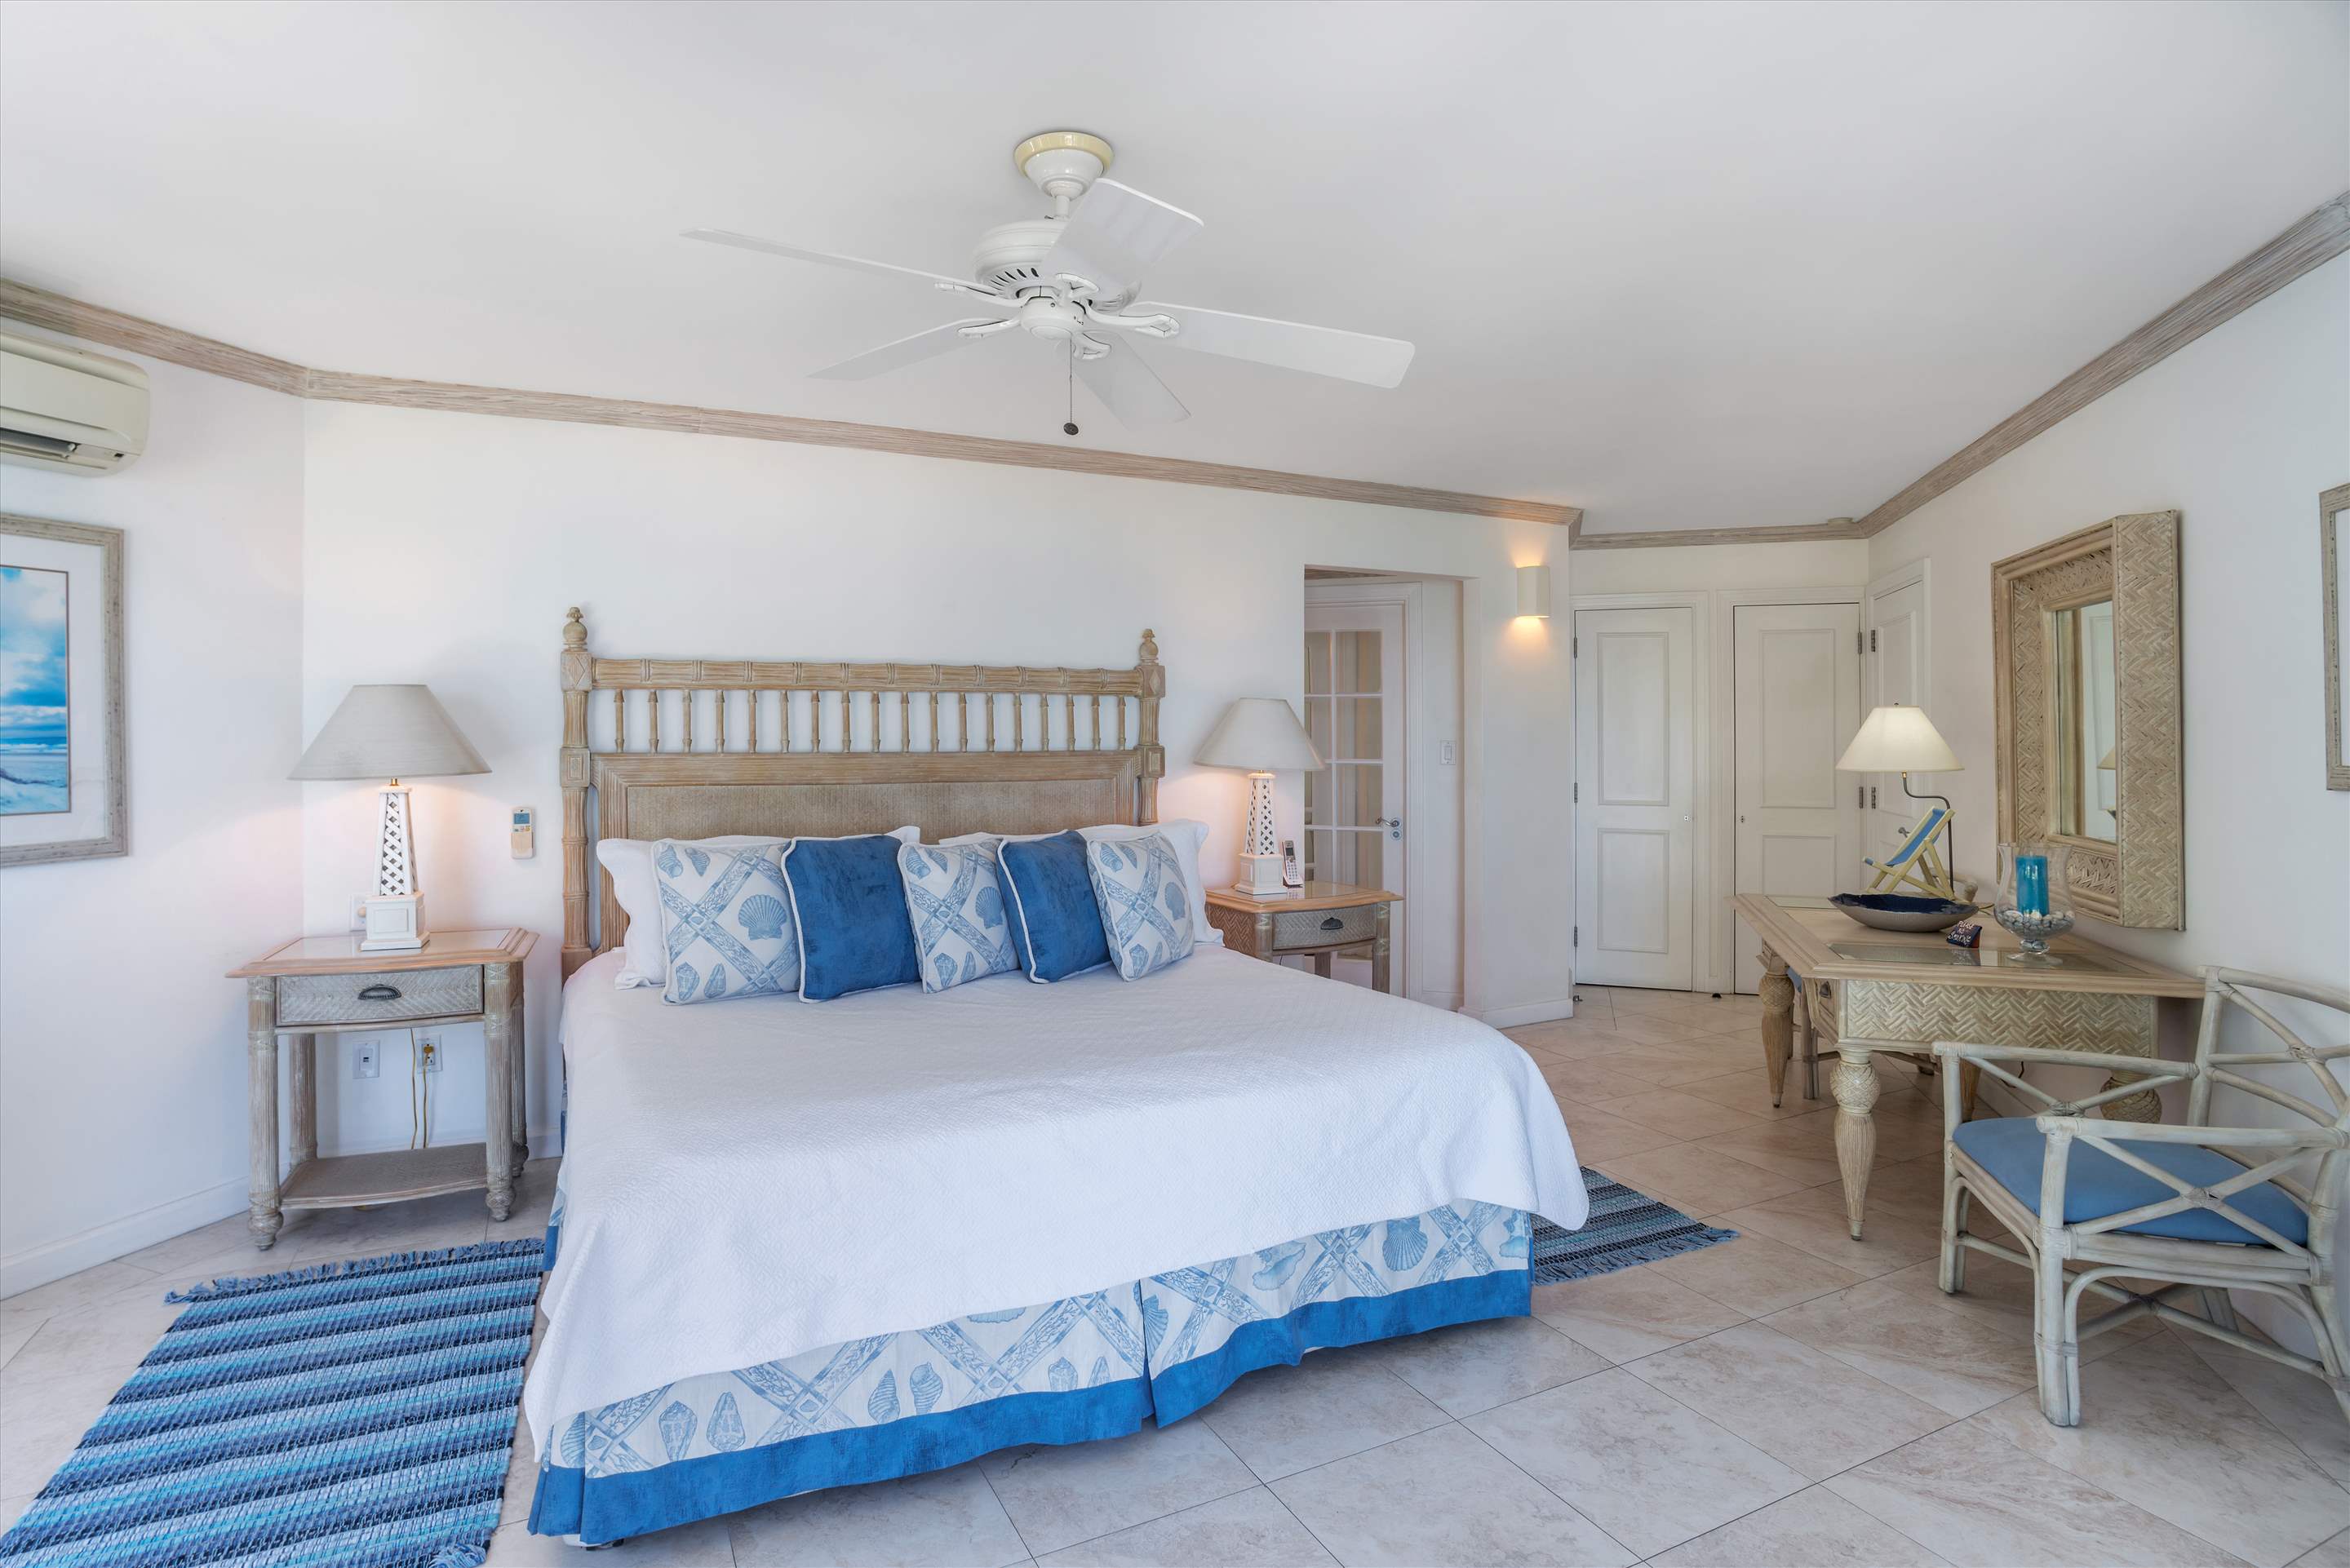 Villas on the Beach 205, 2 bedroom, 2 bedroom apartment in St. James & West Coast, Barbados Photo #8